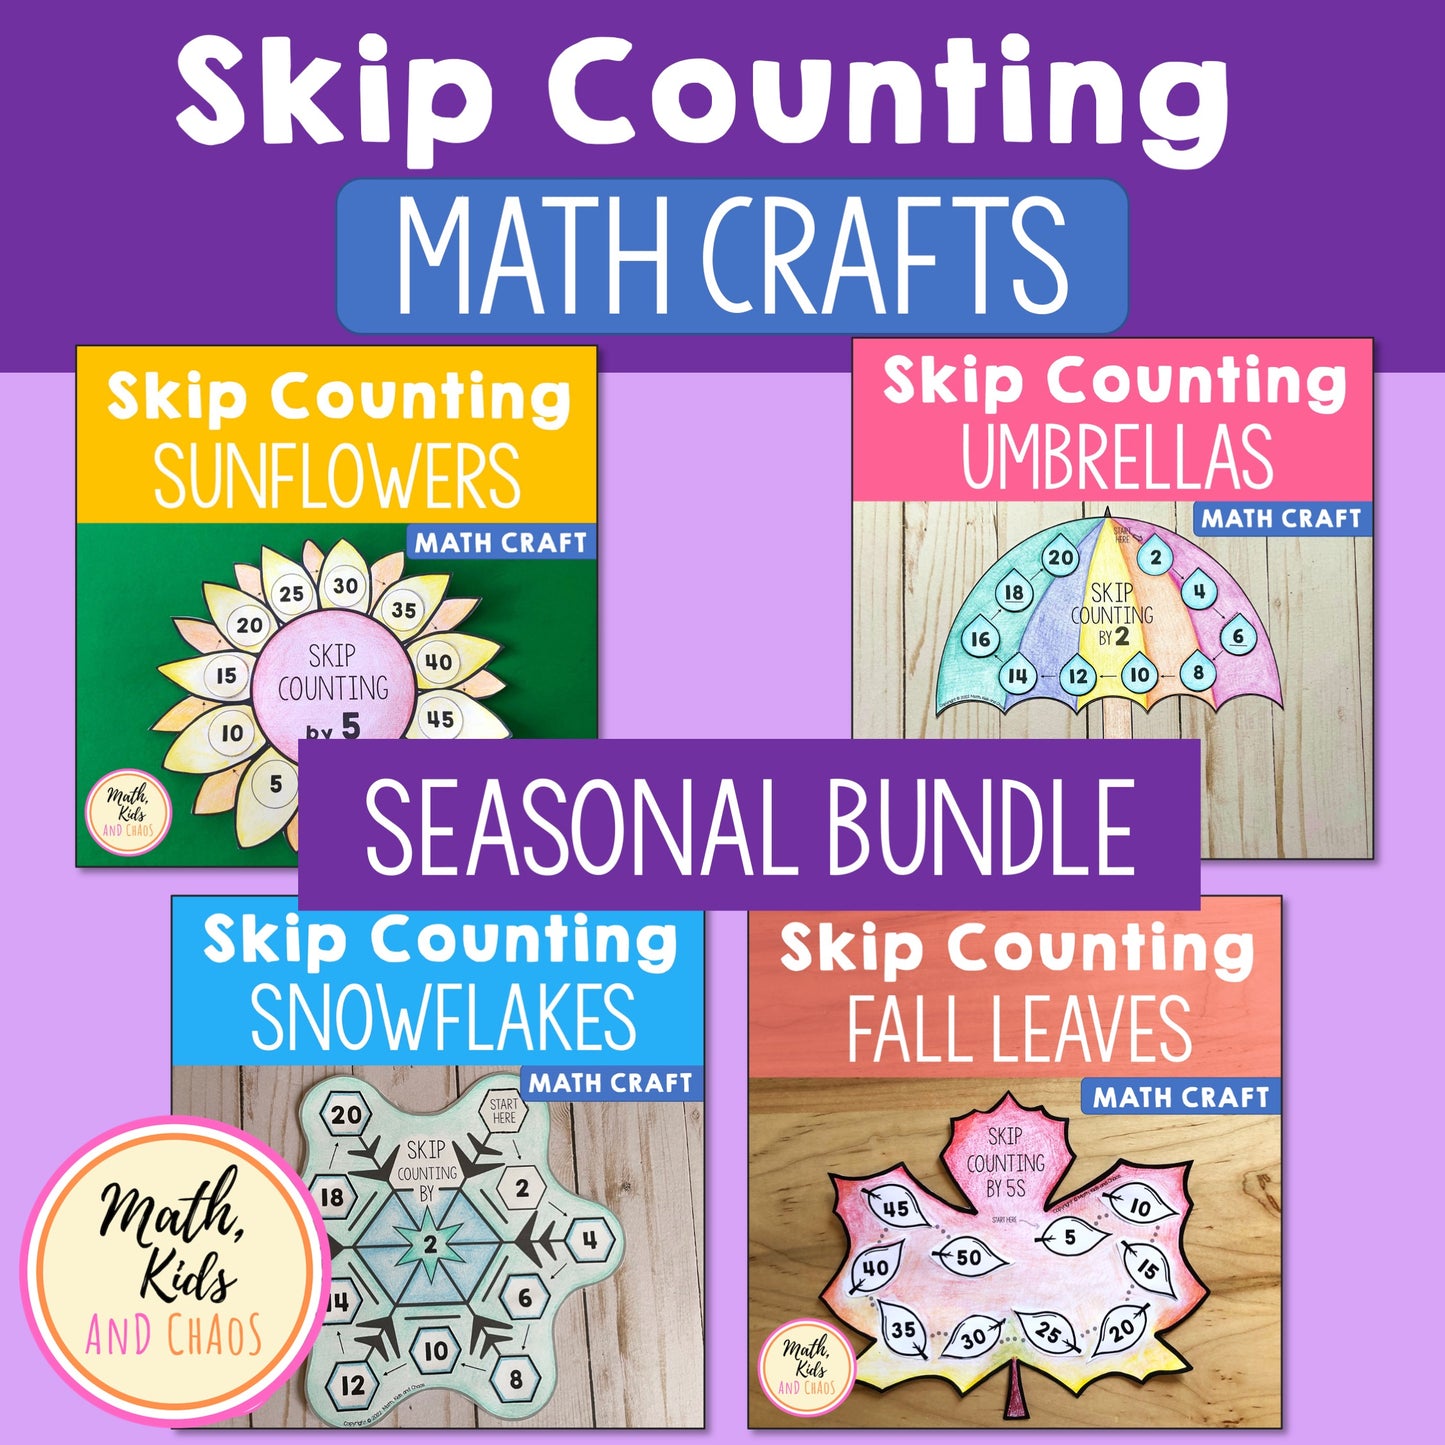 Skip Counting Math Crafts - SEASONAL BUNDLE